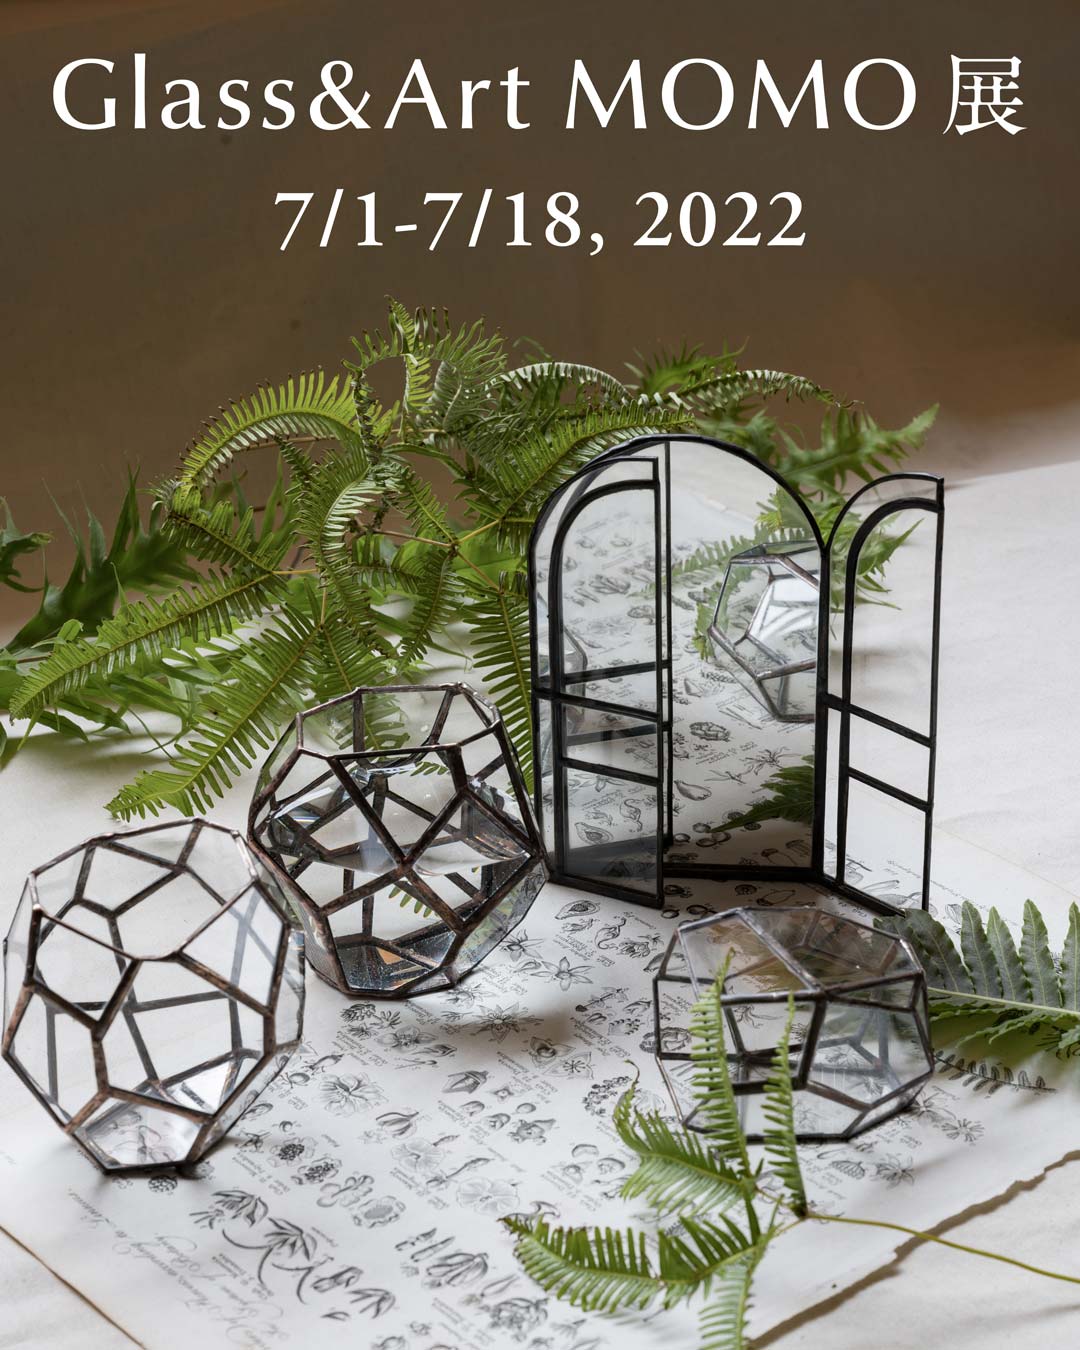 Glass&Art MOMO 展 7/1-7/18, 2022